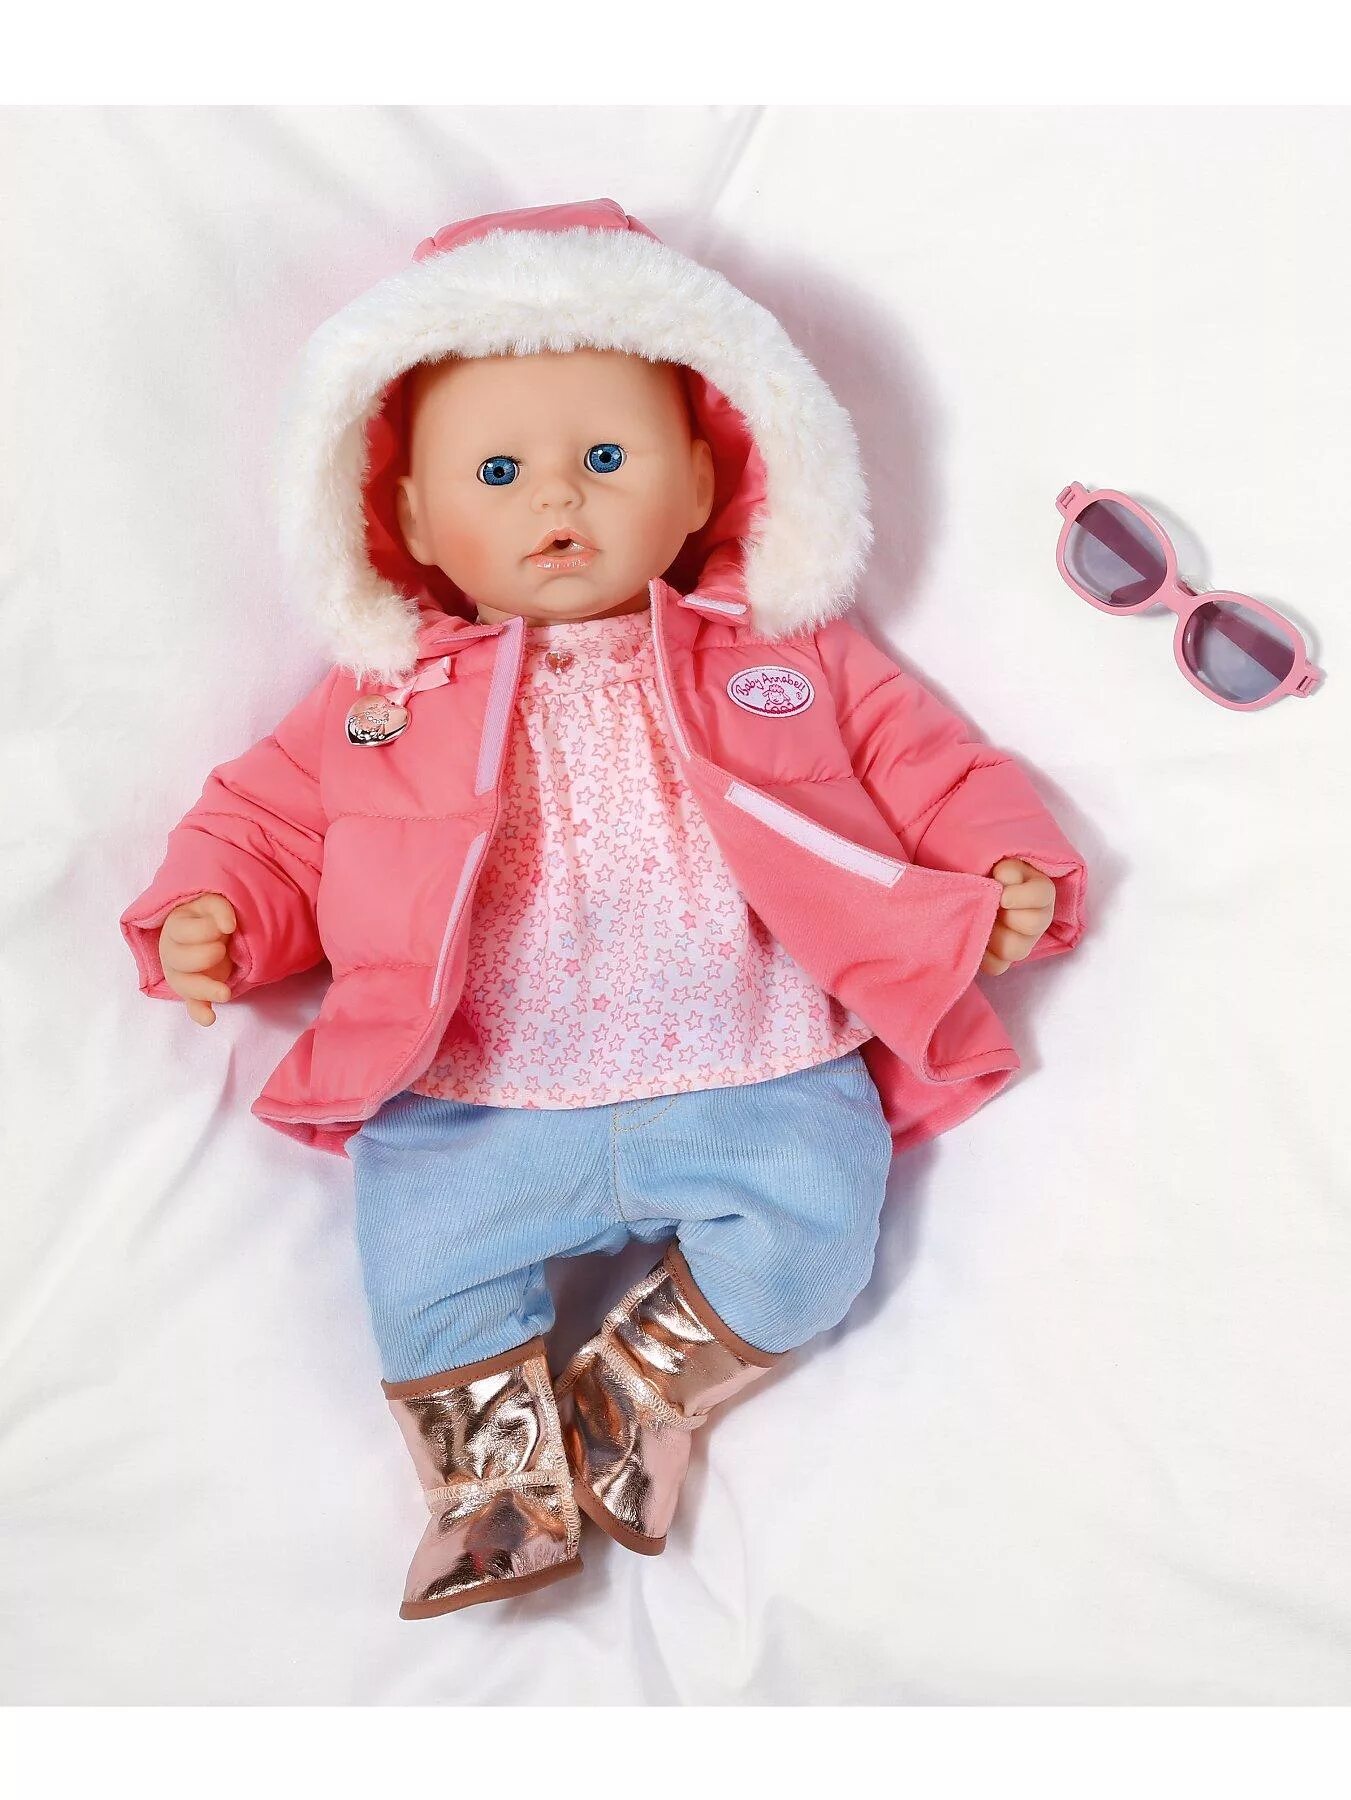 Кукла пупс одежда для кукол. Зимняя одежда Беби Аннабель. Беби Борн Запф Криэйшн. Одежда для Беби Анабель. Baby Annabell одежда для кукол.